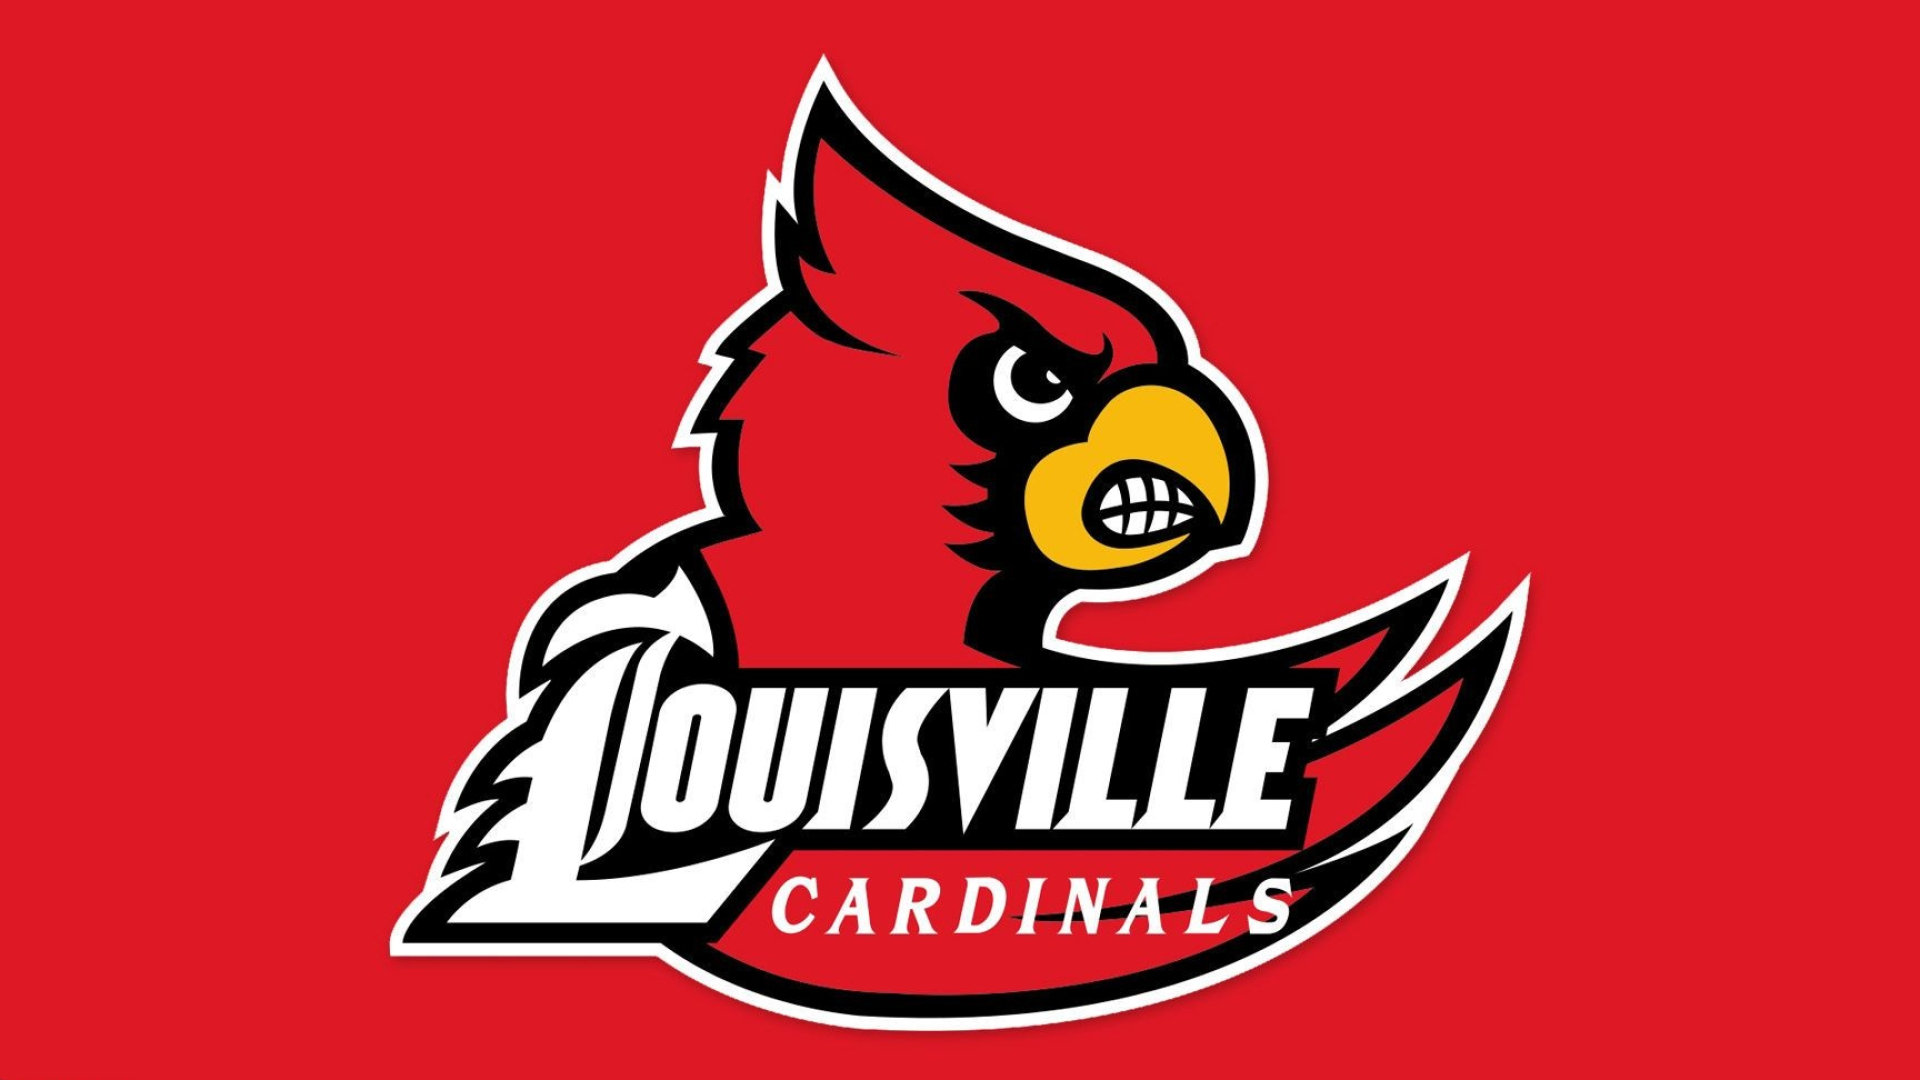 Louisville Cardinals, Eye-catching wallpapers, Team spirit, Athletic prowess, 1920x1080 Full HD Desktop